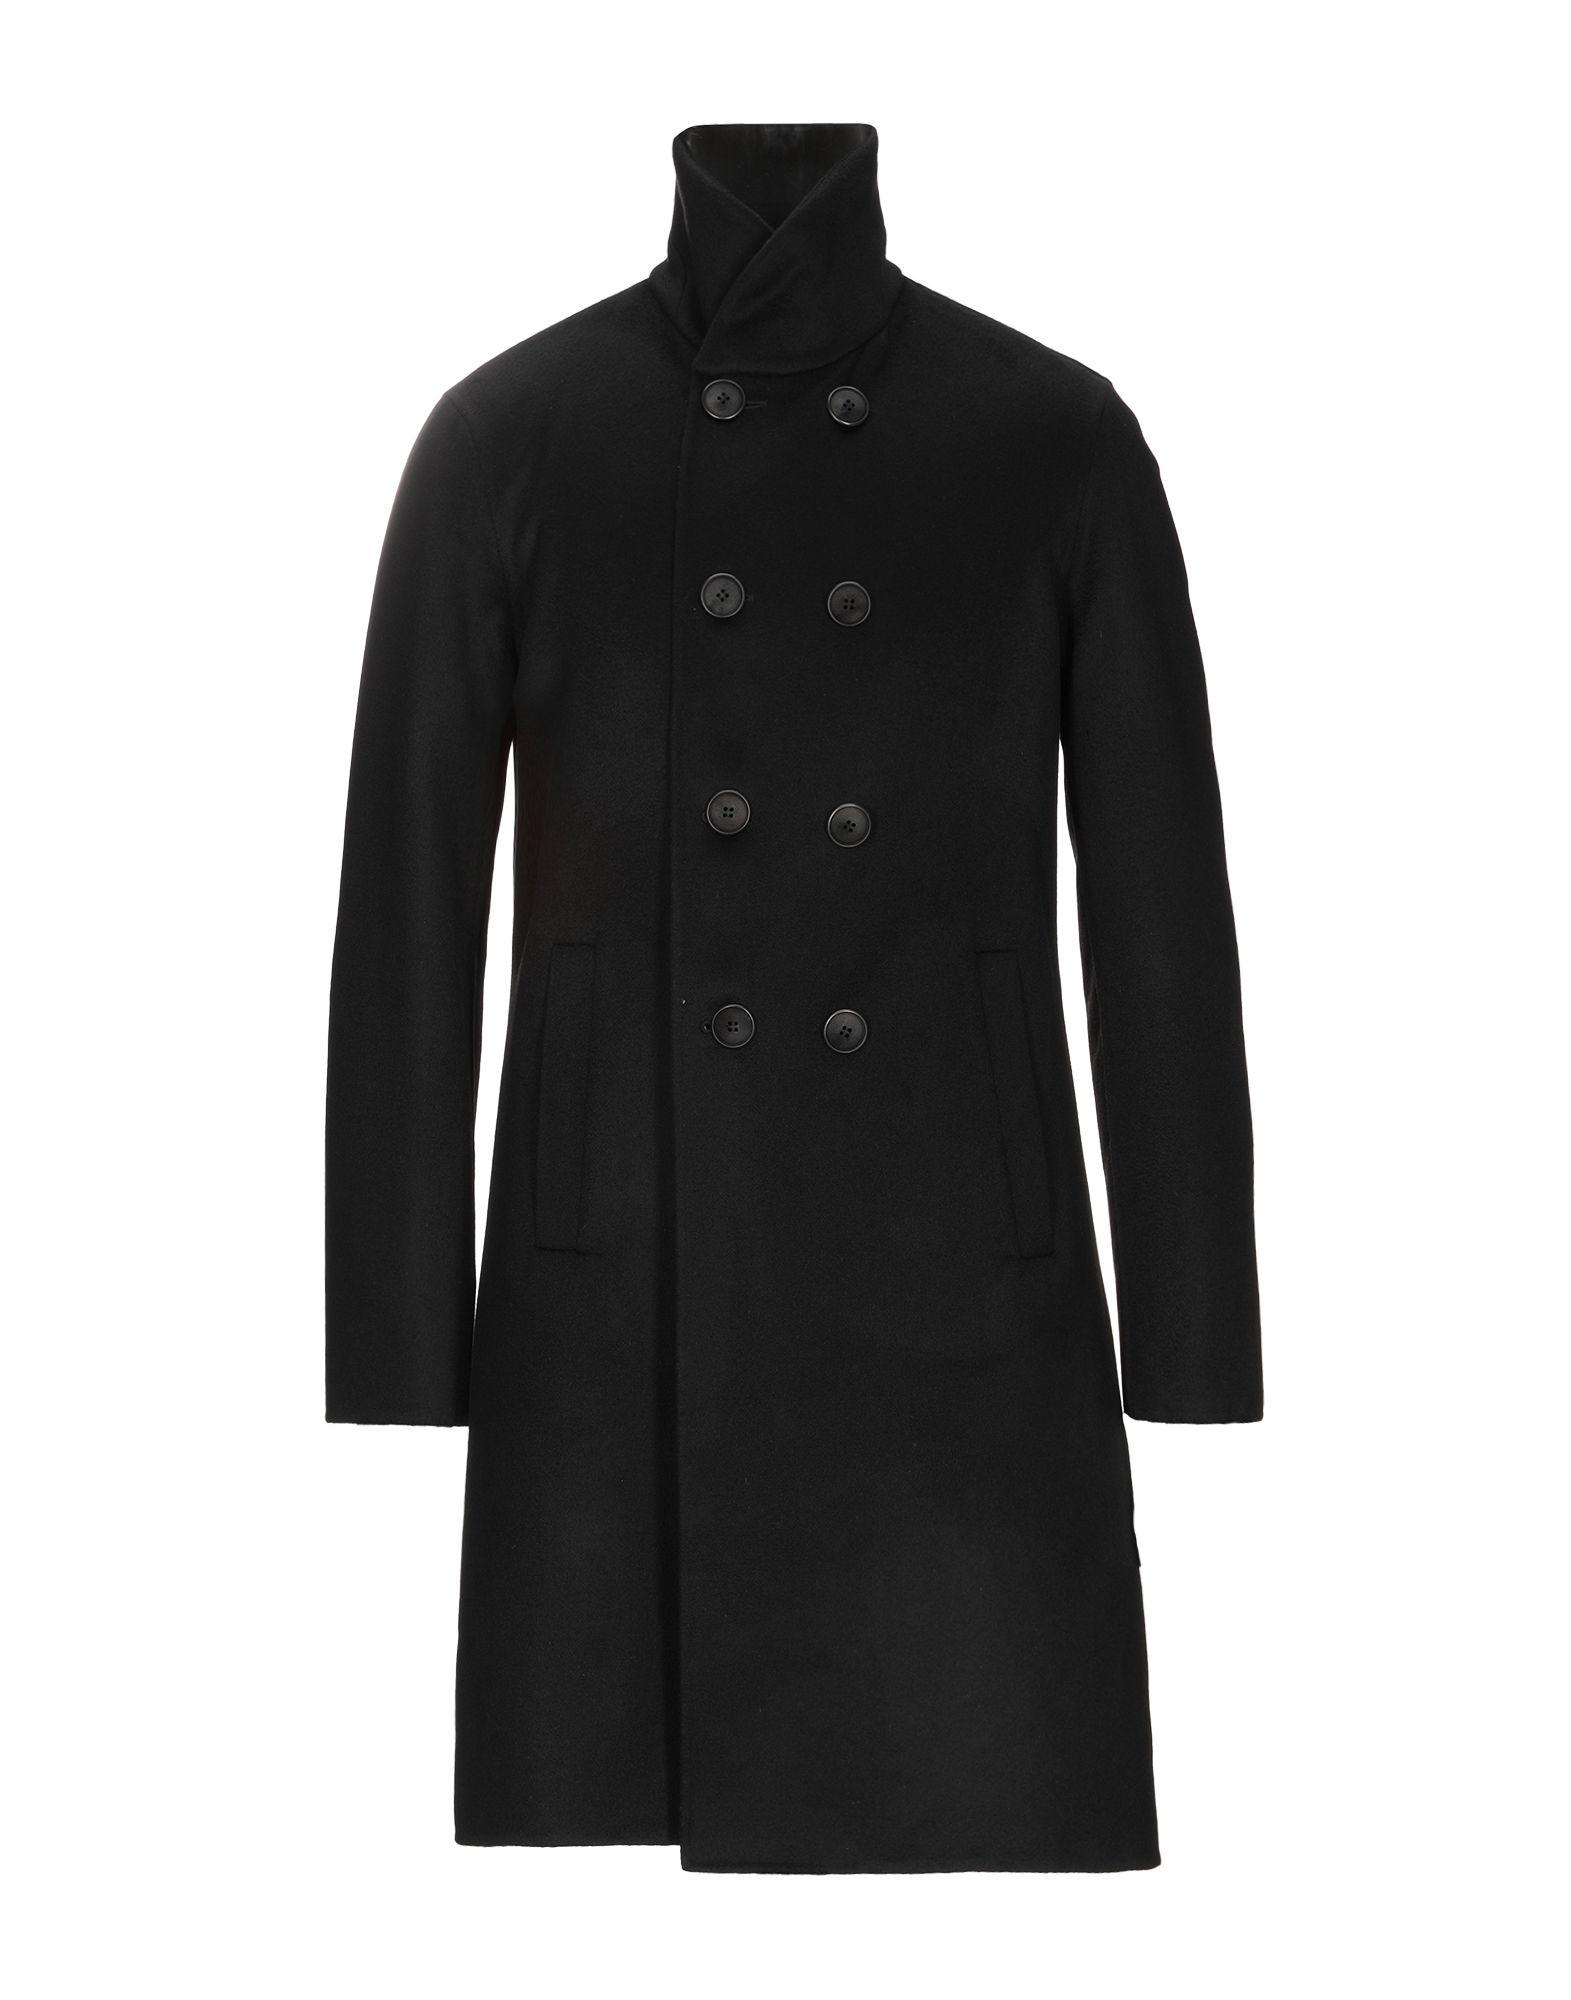 Giorgio Armani Synthetic Coat in Black for Men - Lyst